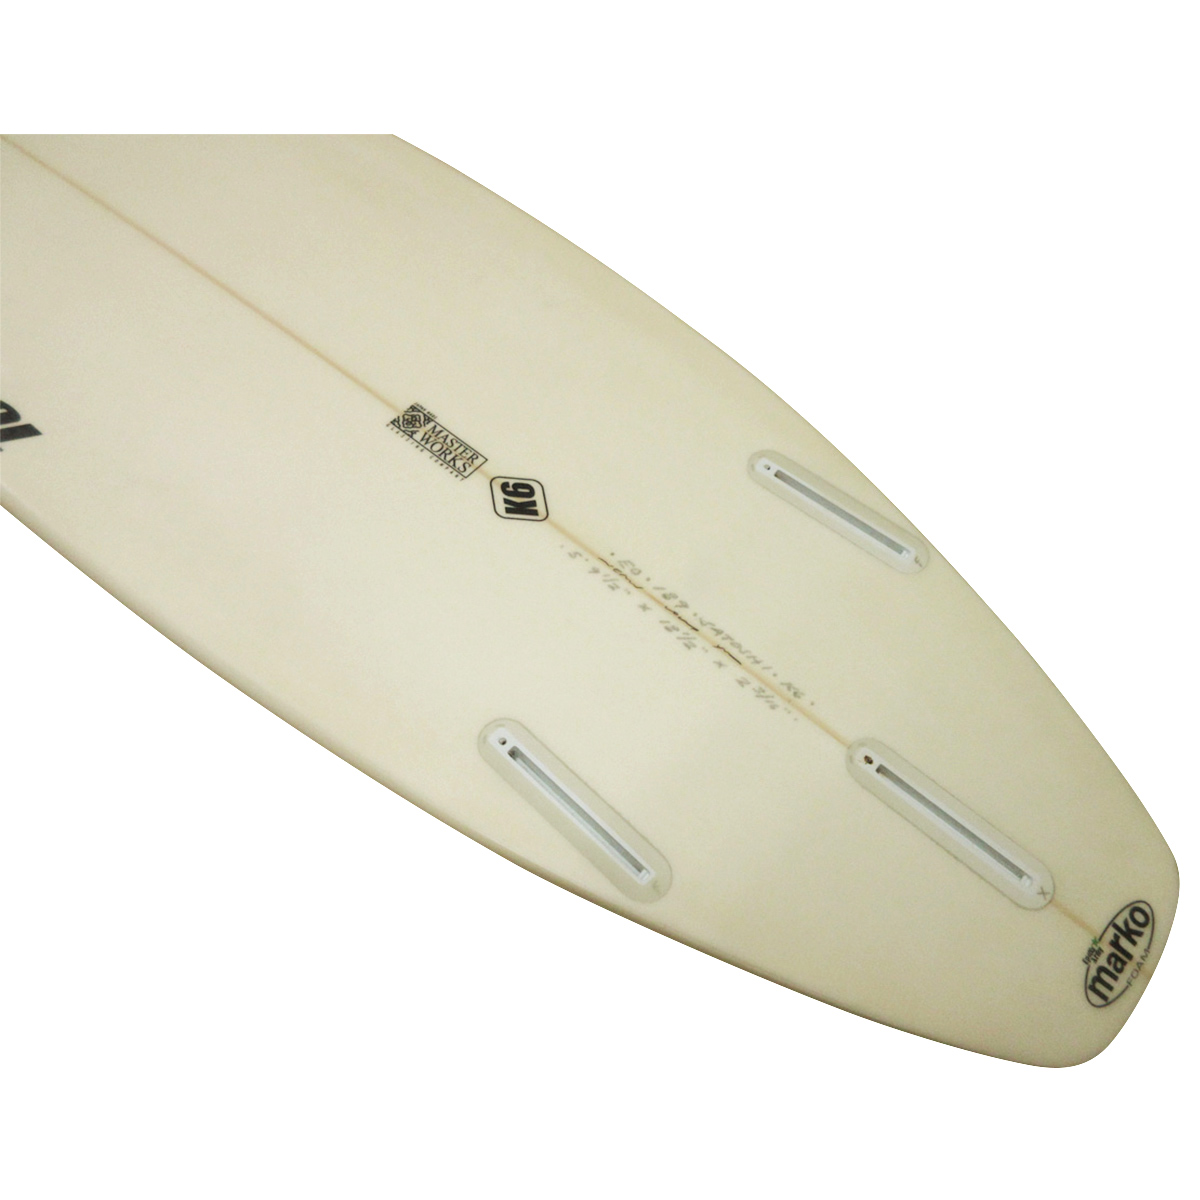 TOKORO SURFBOARDS / 5'9.5 K6 EPS Japan Made